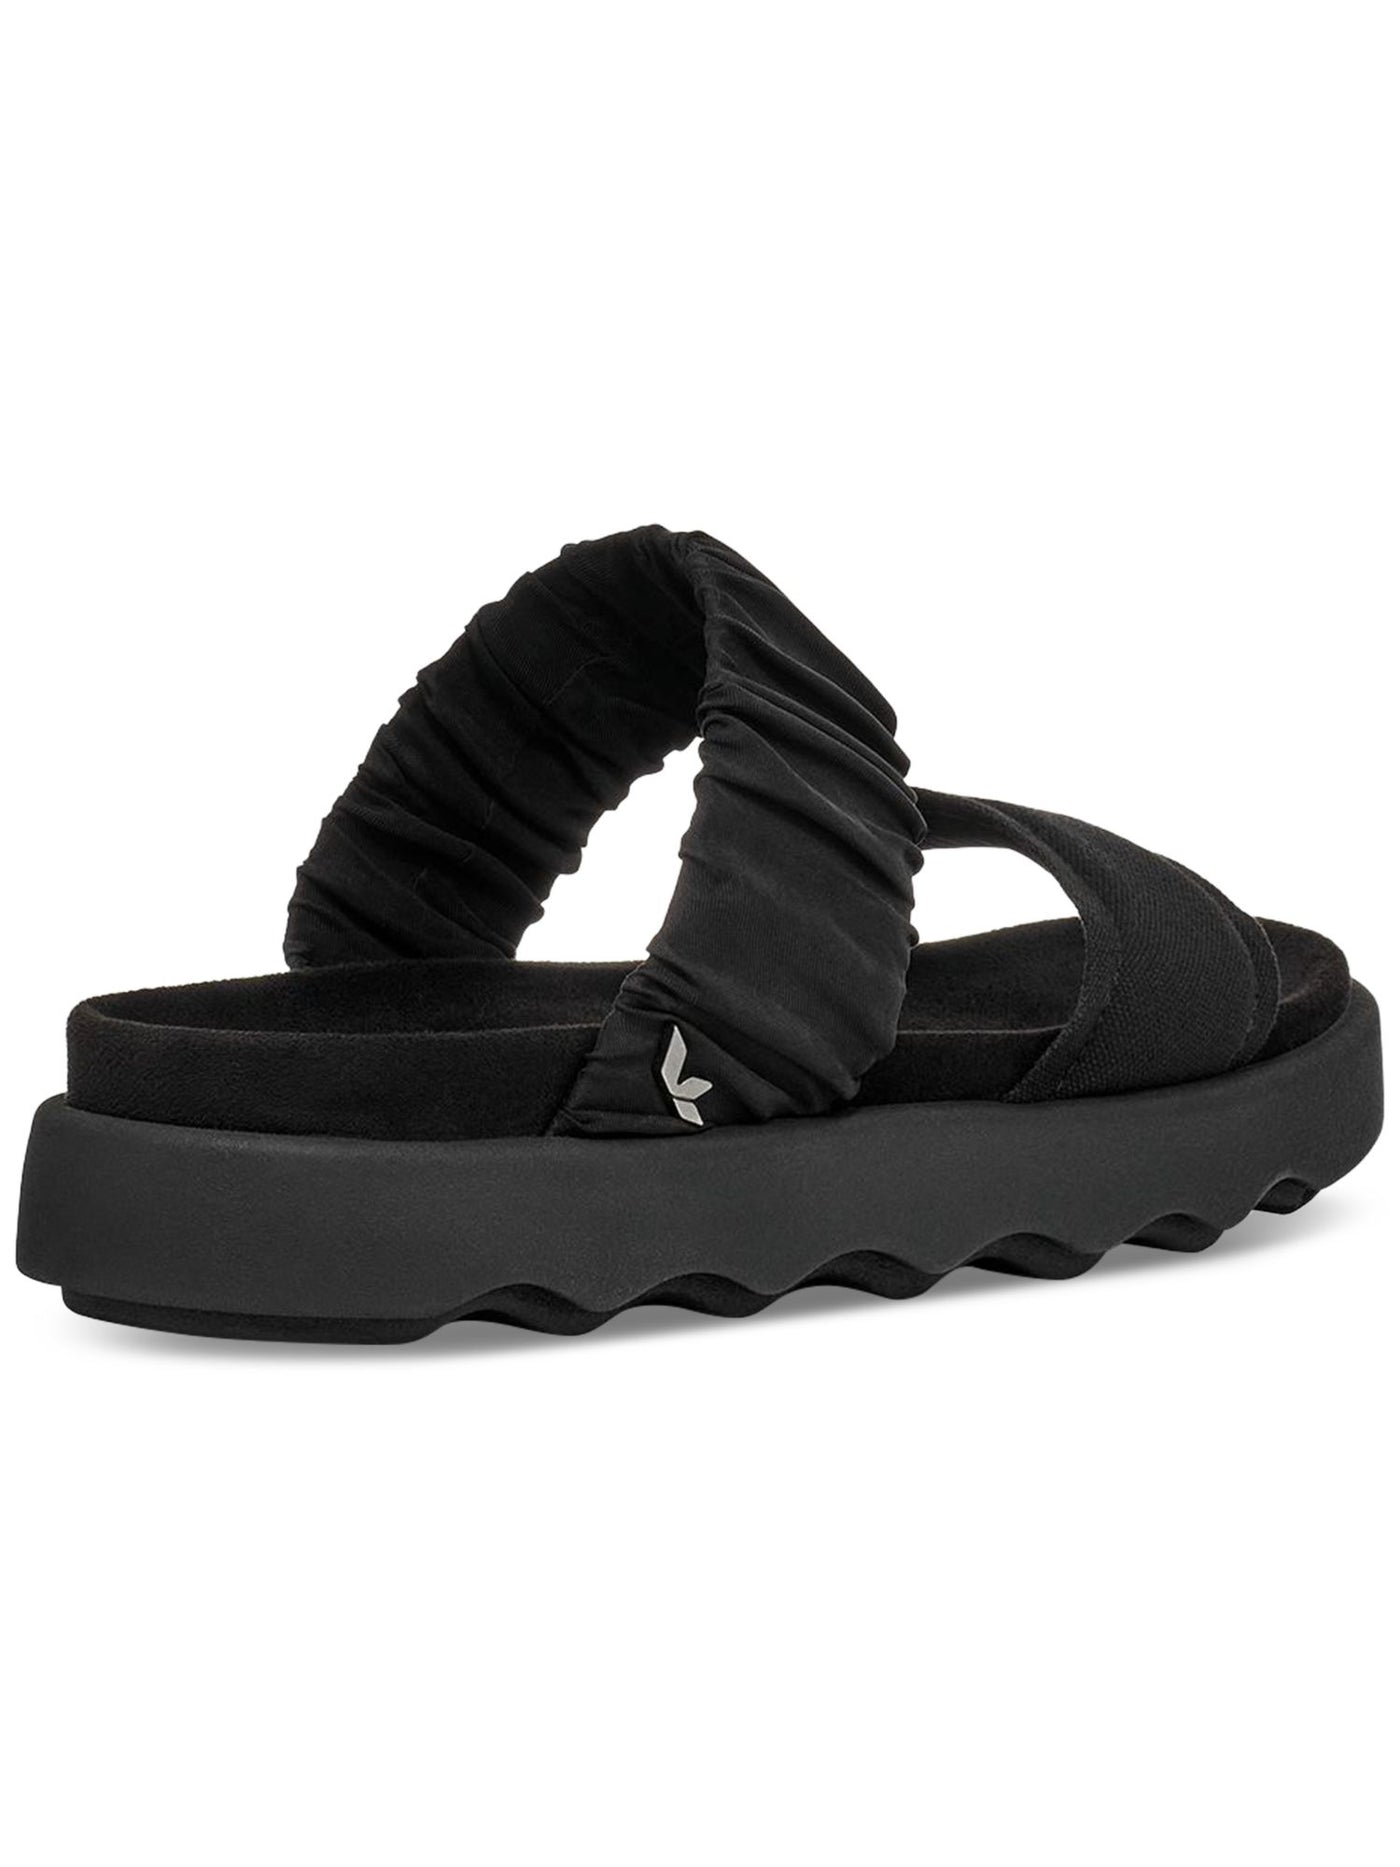 KOOLABURRA Womens Black Ruched Comfort Tayla Round Toe Platform Slip On Sandals Shoes 6